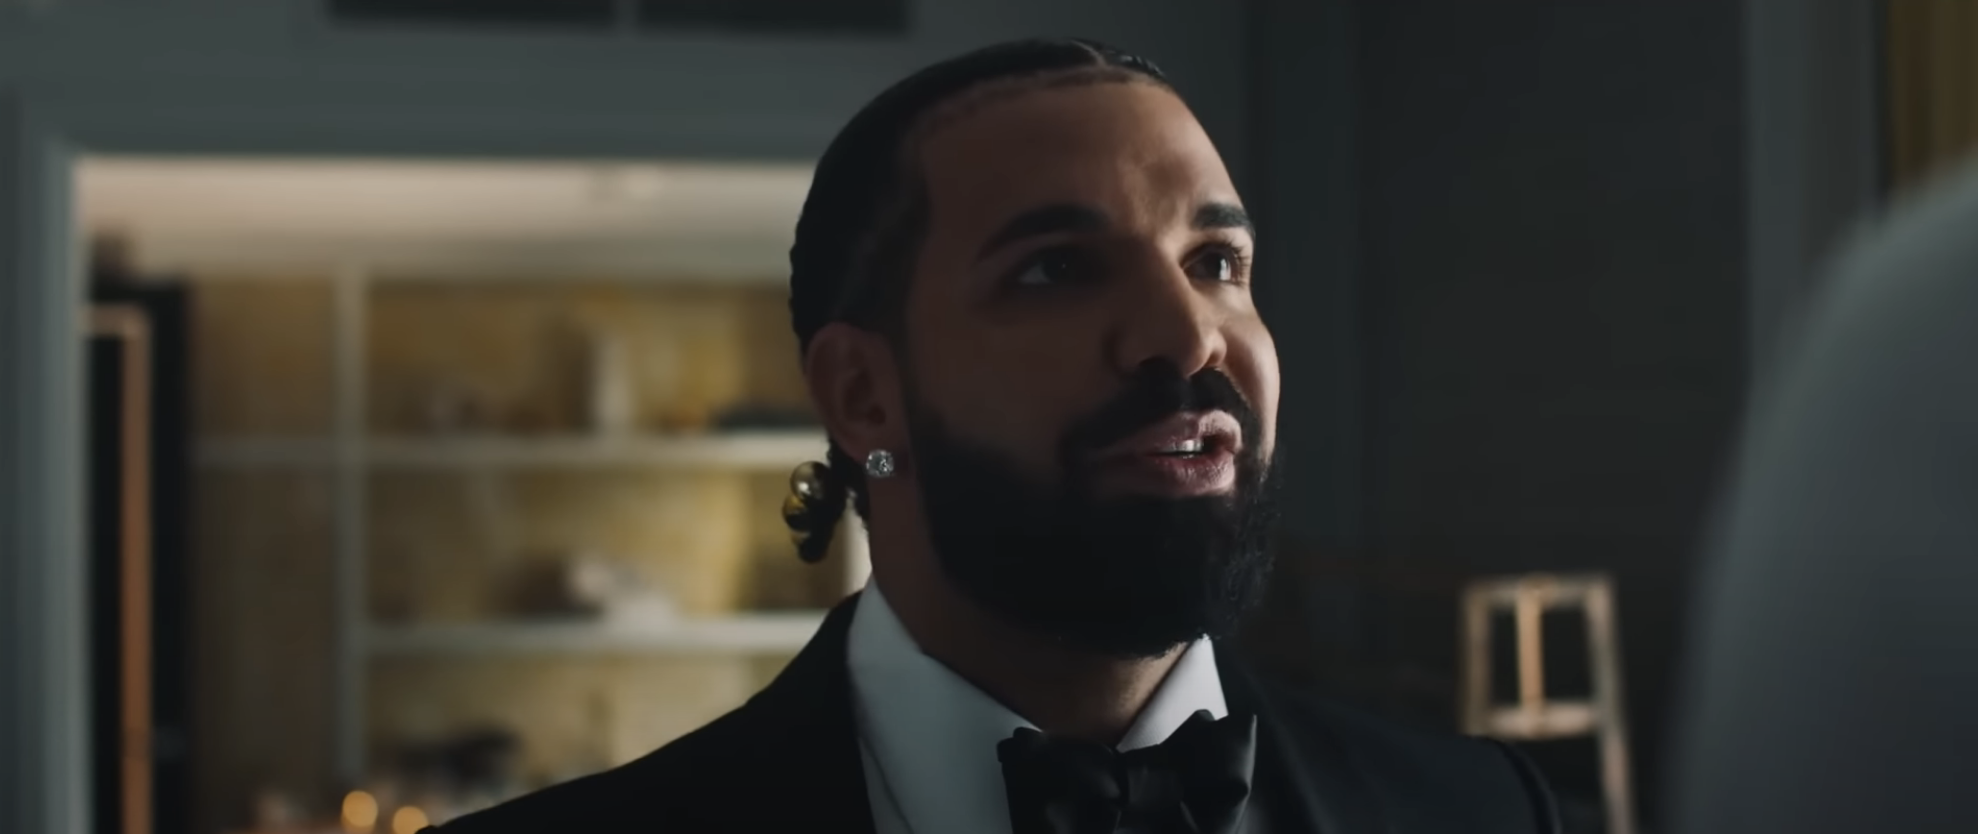 Drake Fashion, News, Photos and Videos